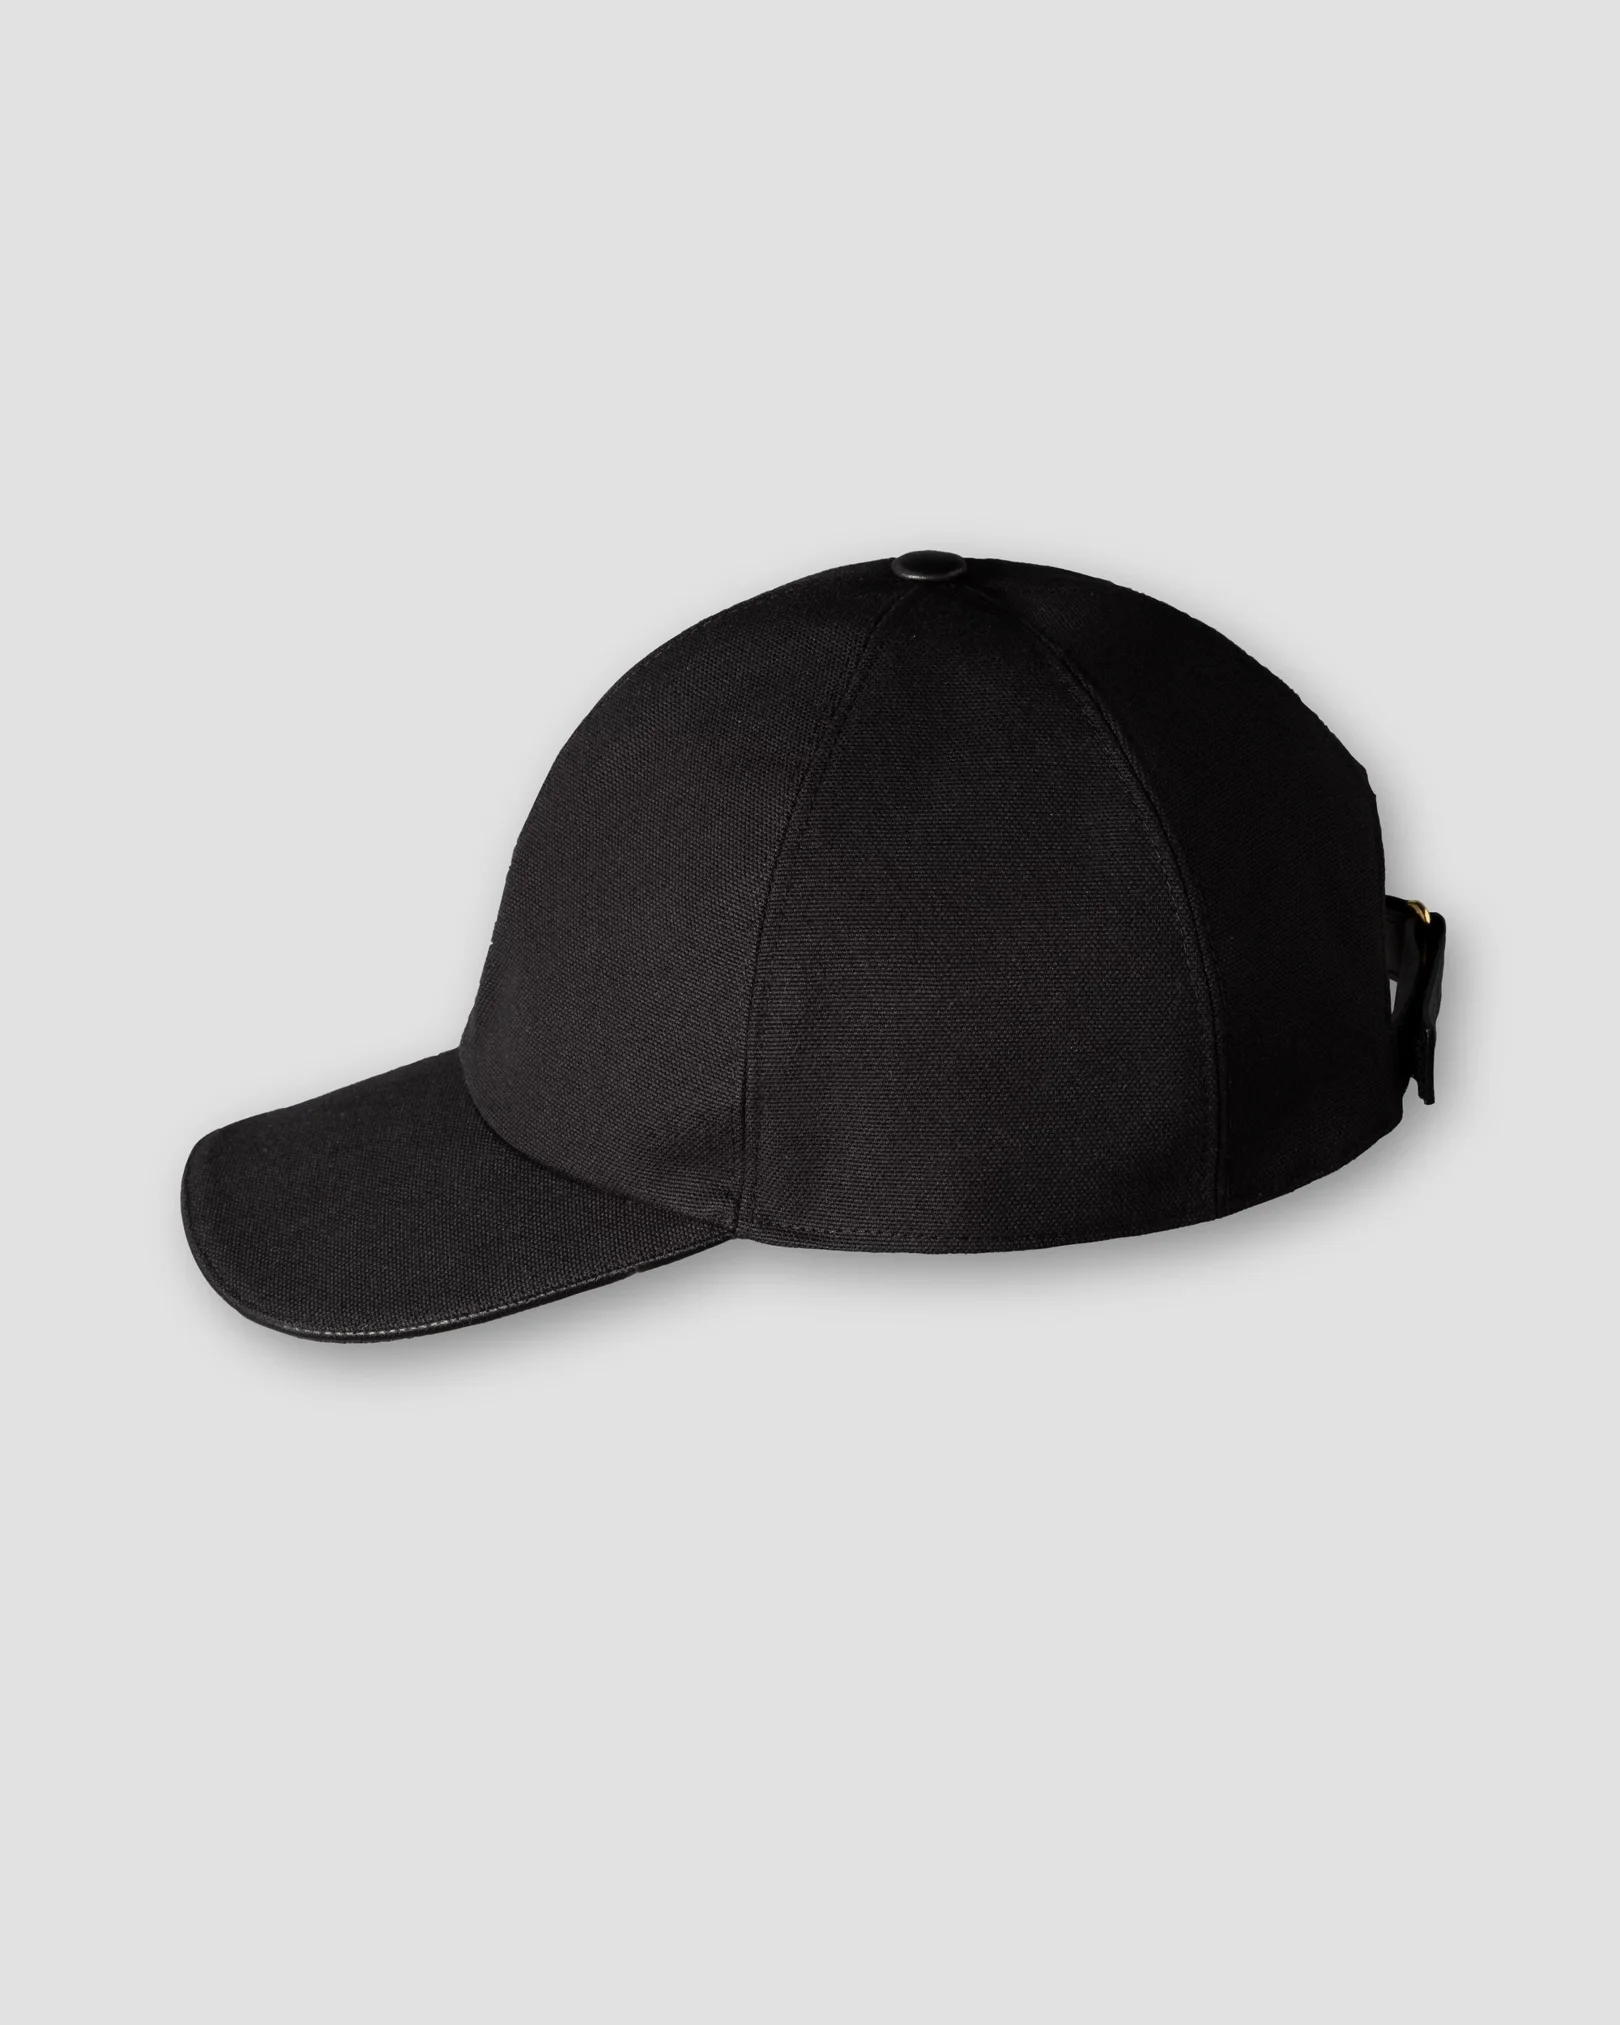 Eton - black baseball cap